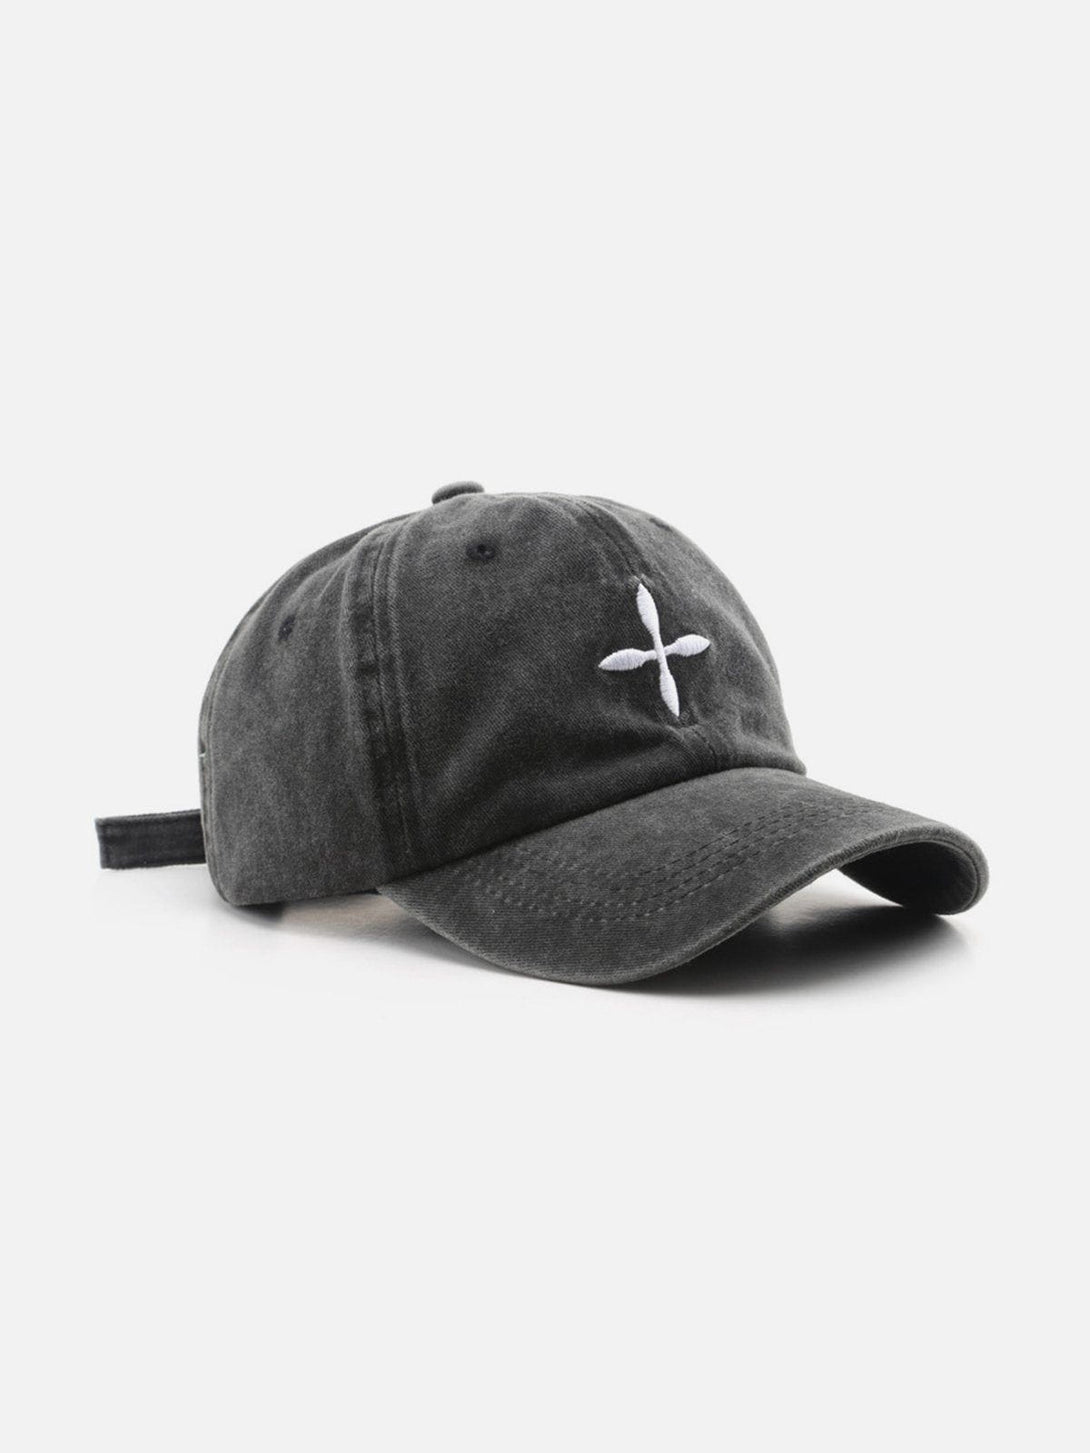 Levefly - Embroidery Crucifix Baseball Cap - Streetwear Fashion - levefly.com